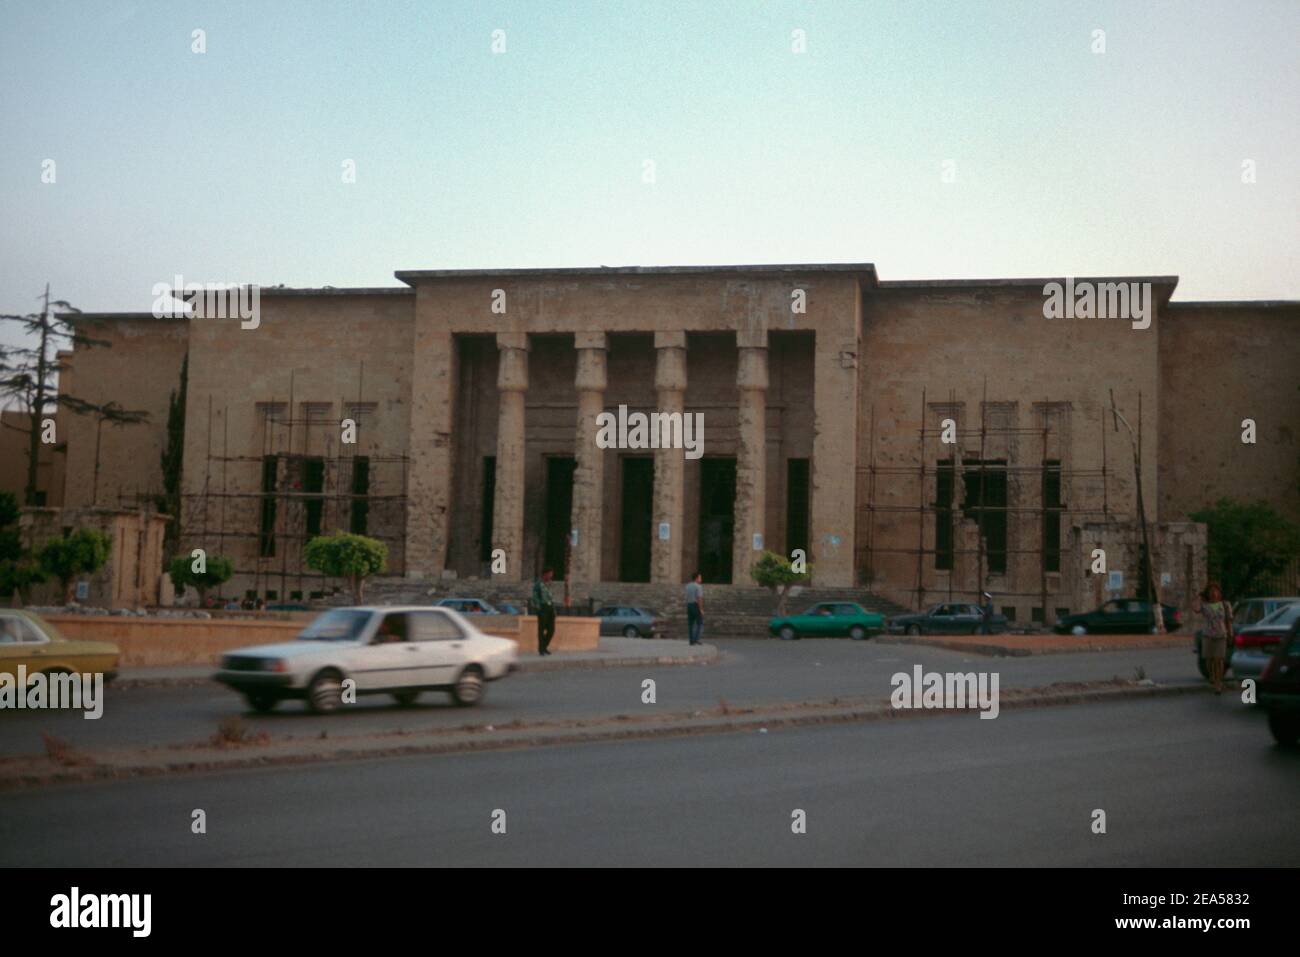 Shlomo argov hi-res stock photography and images - Alamy